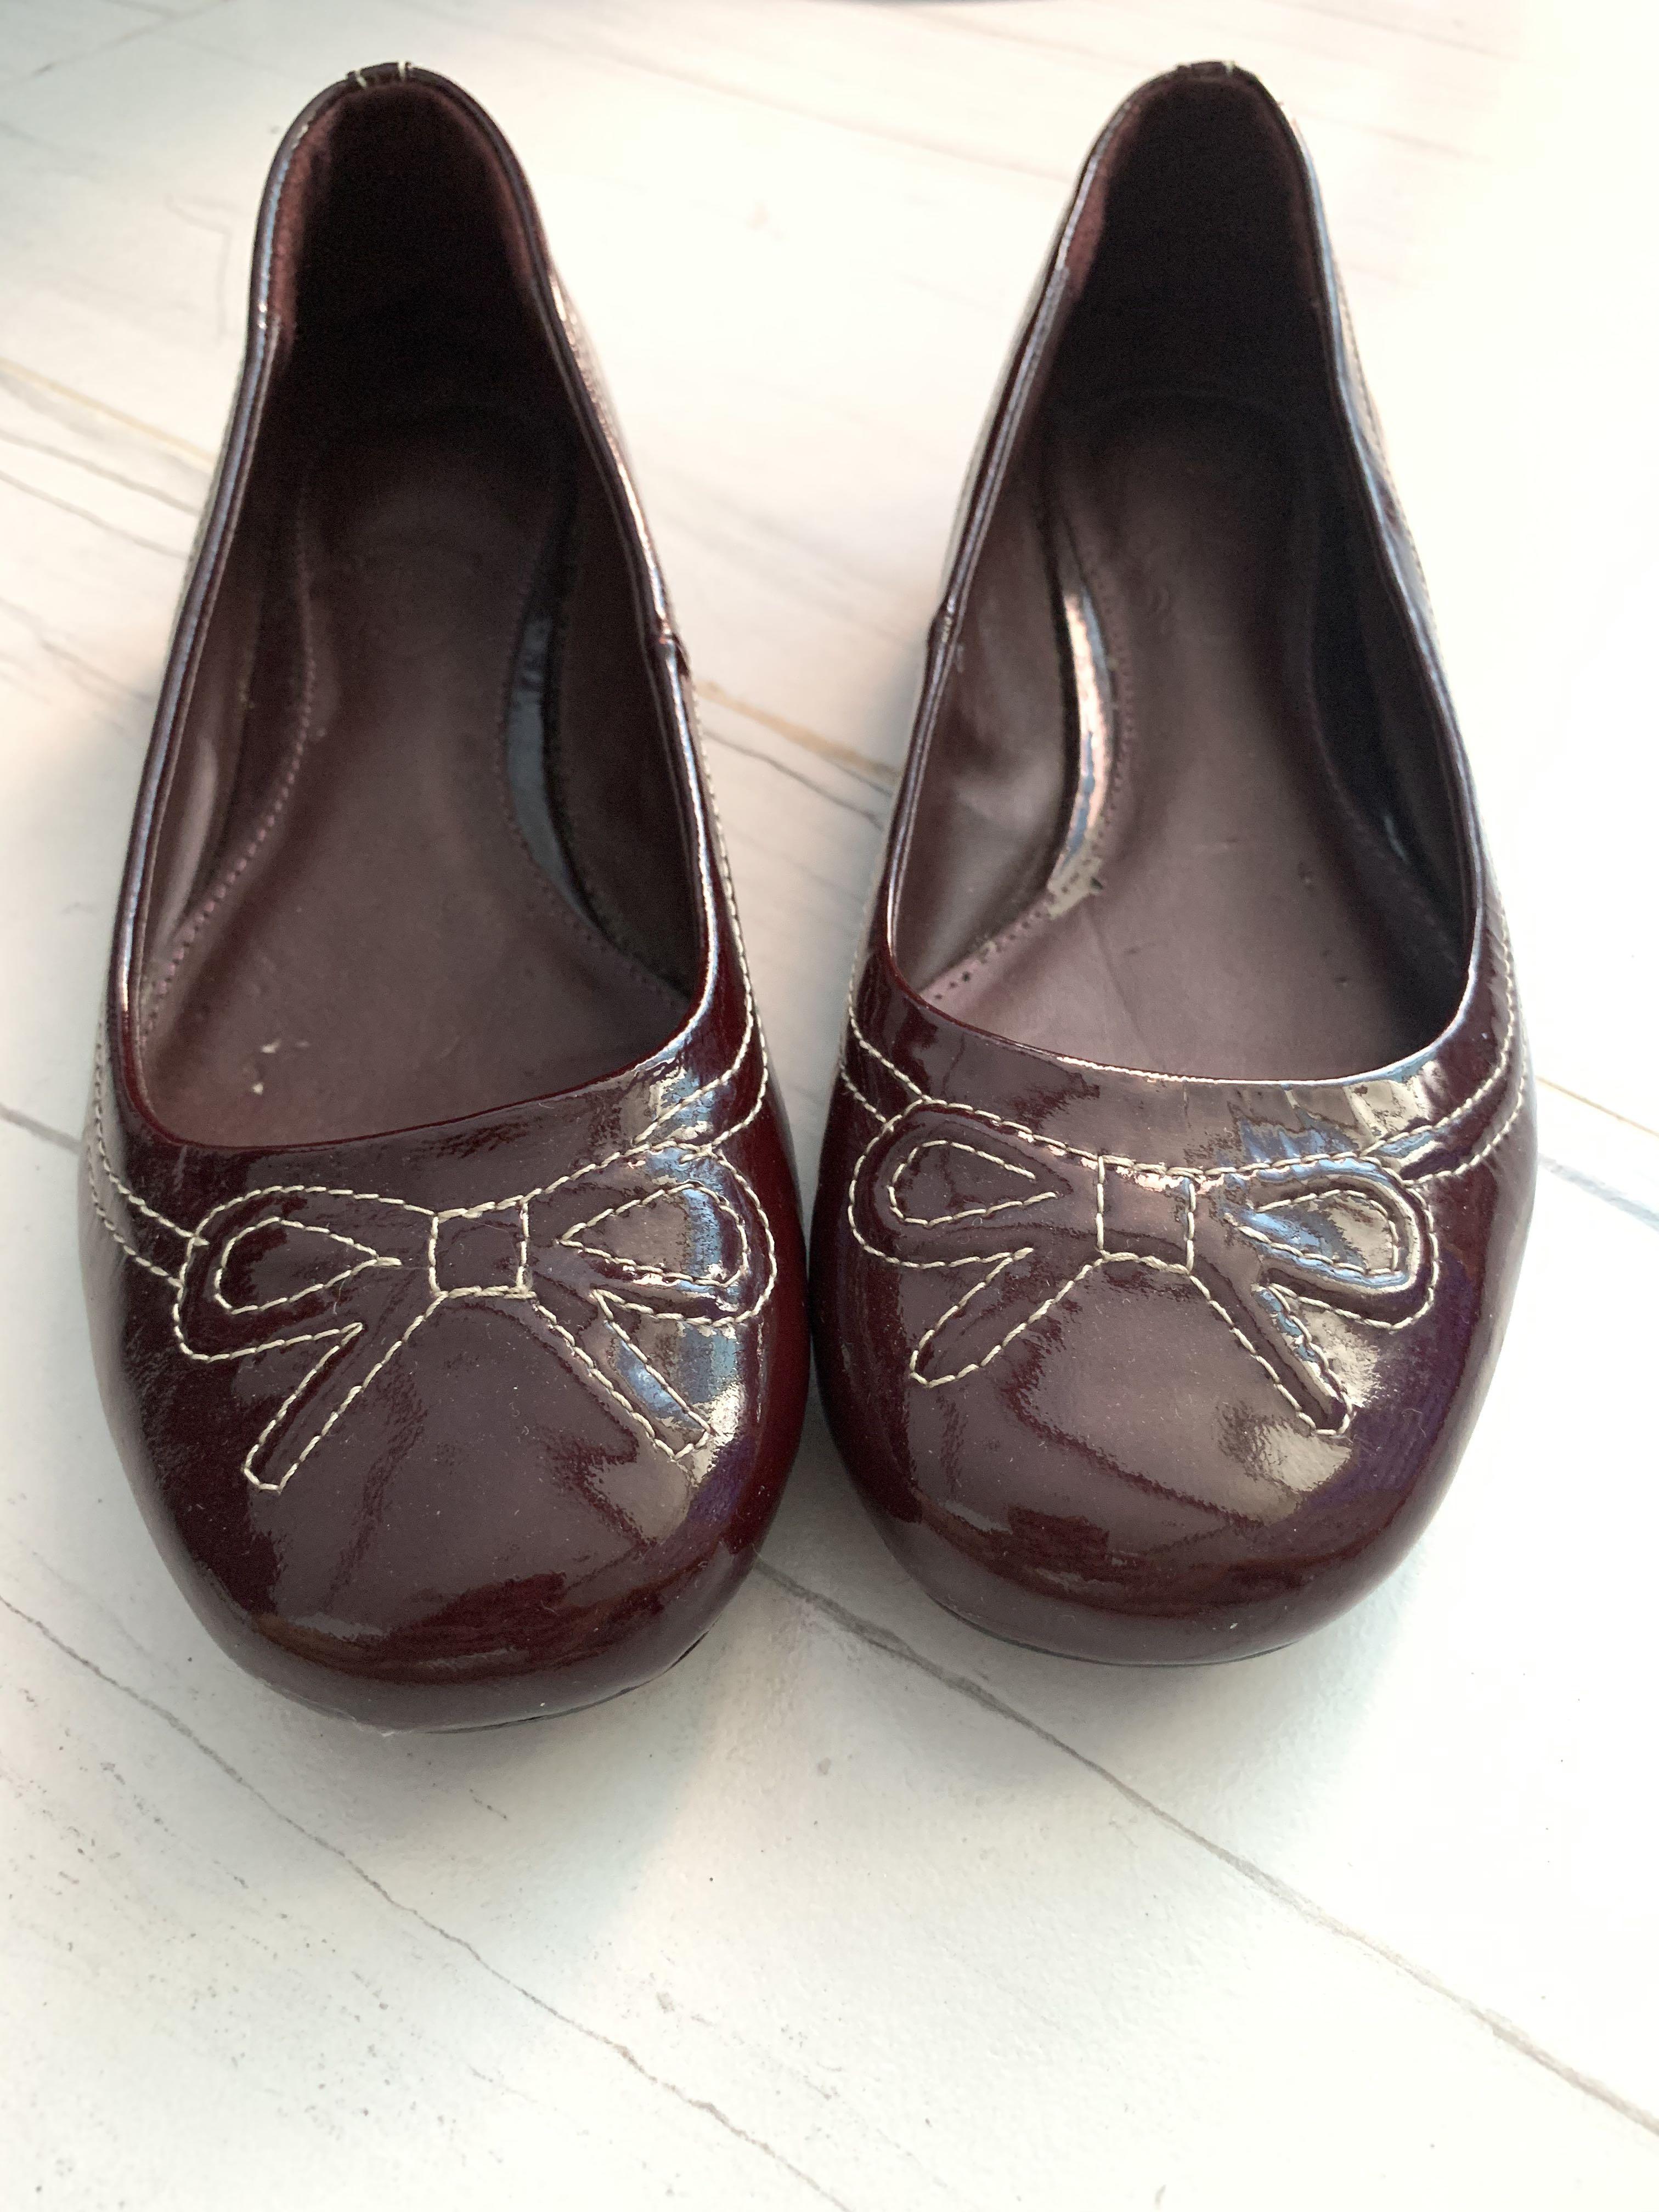 marks & spencer footglove shoes